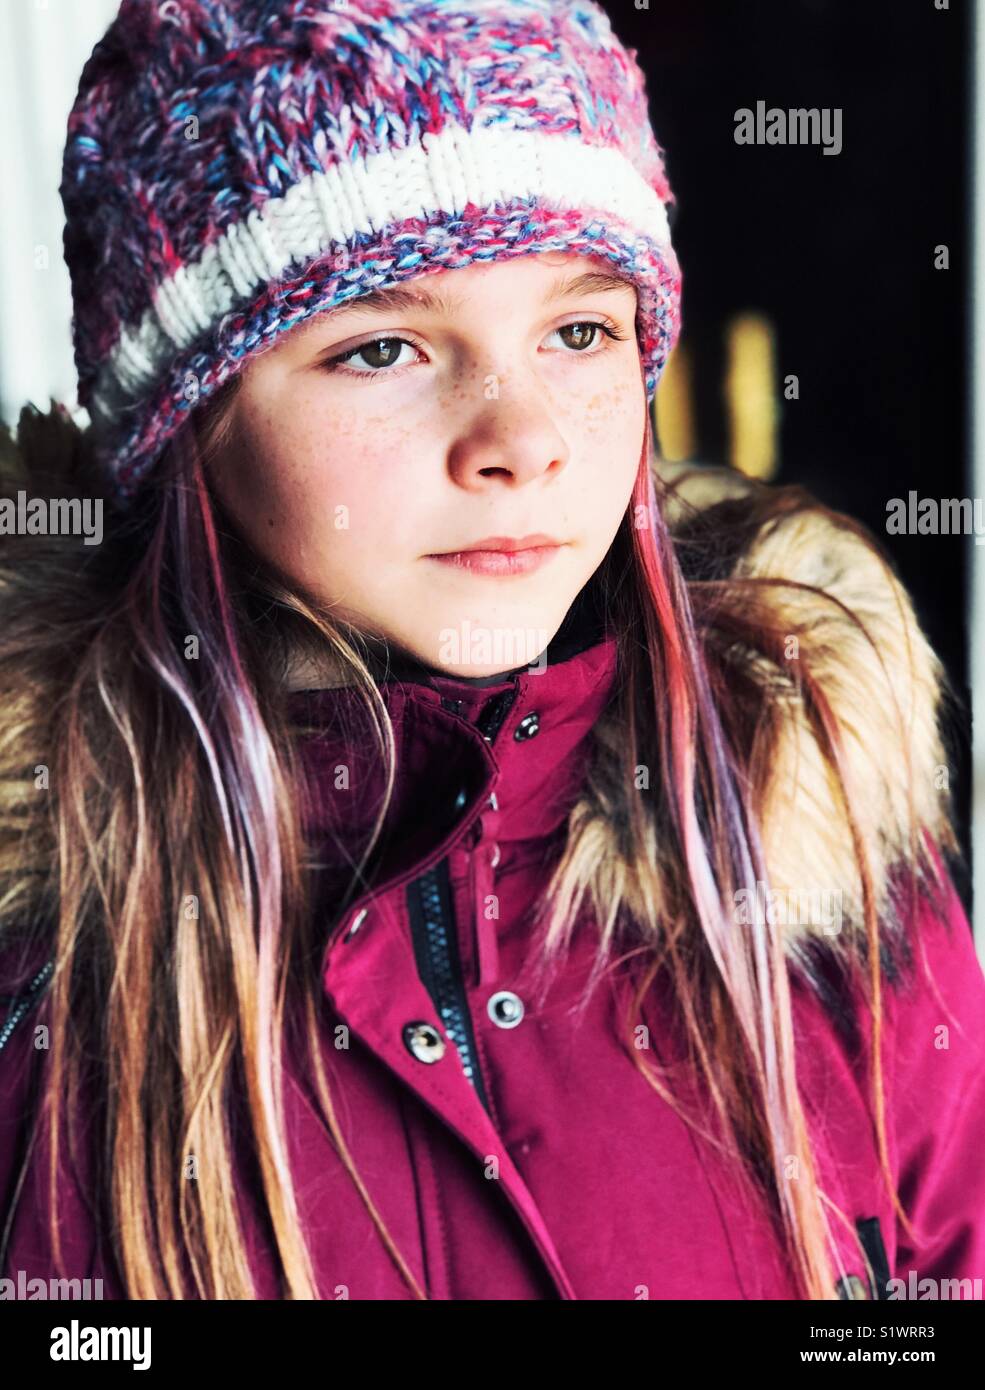 Portrait of 10 year old girl with purple hair streaks wearing winter ...